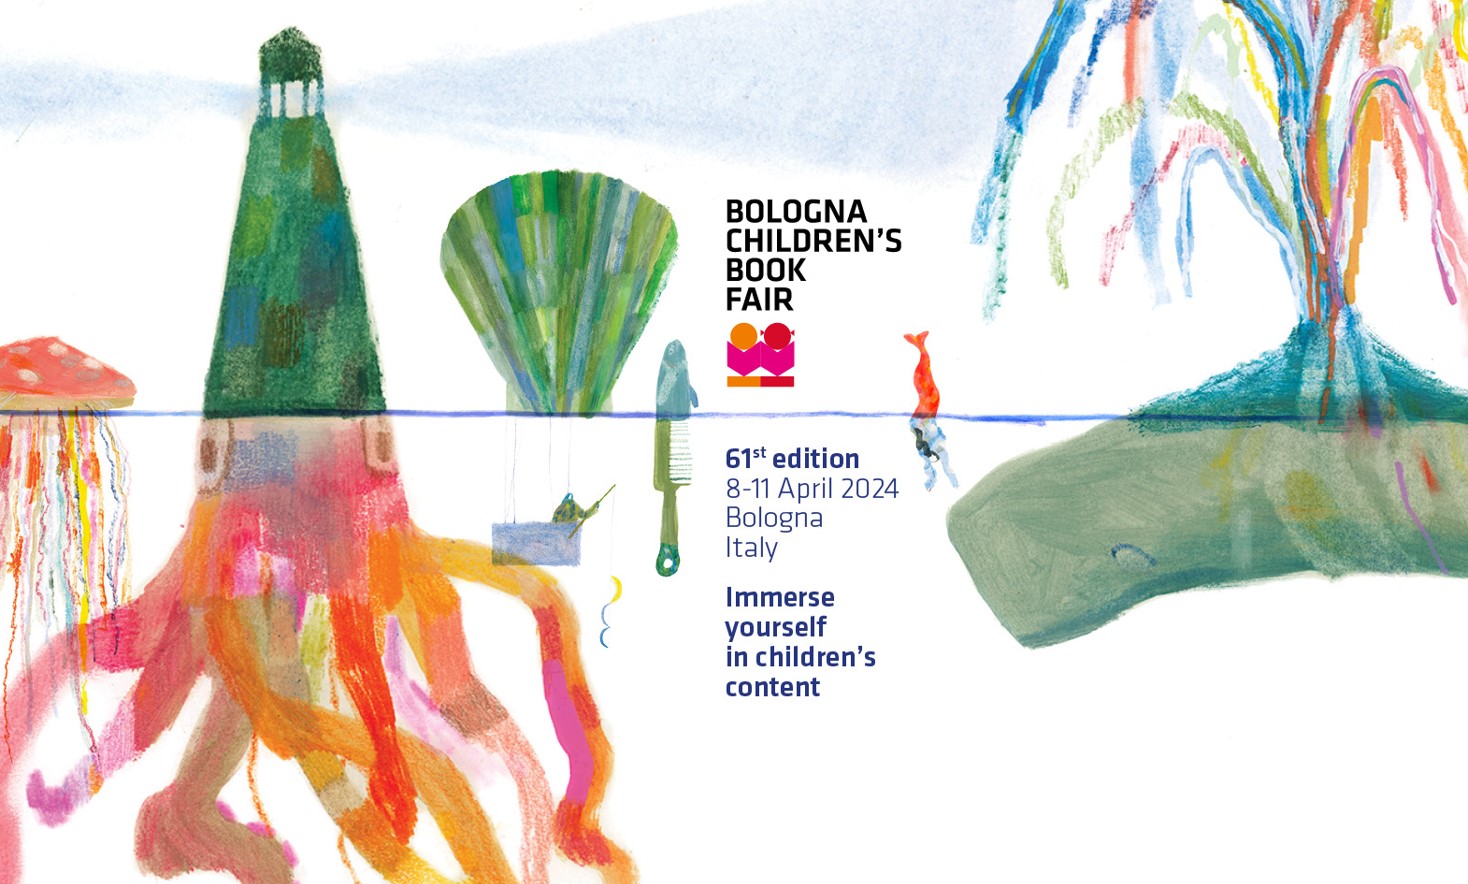 Bologna Children's Book Fair